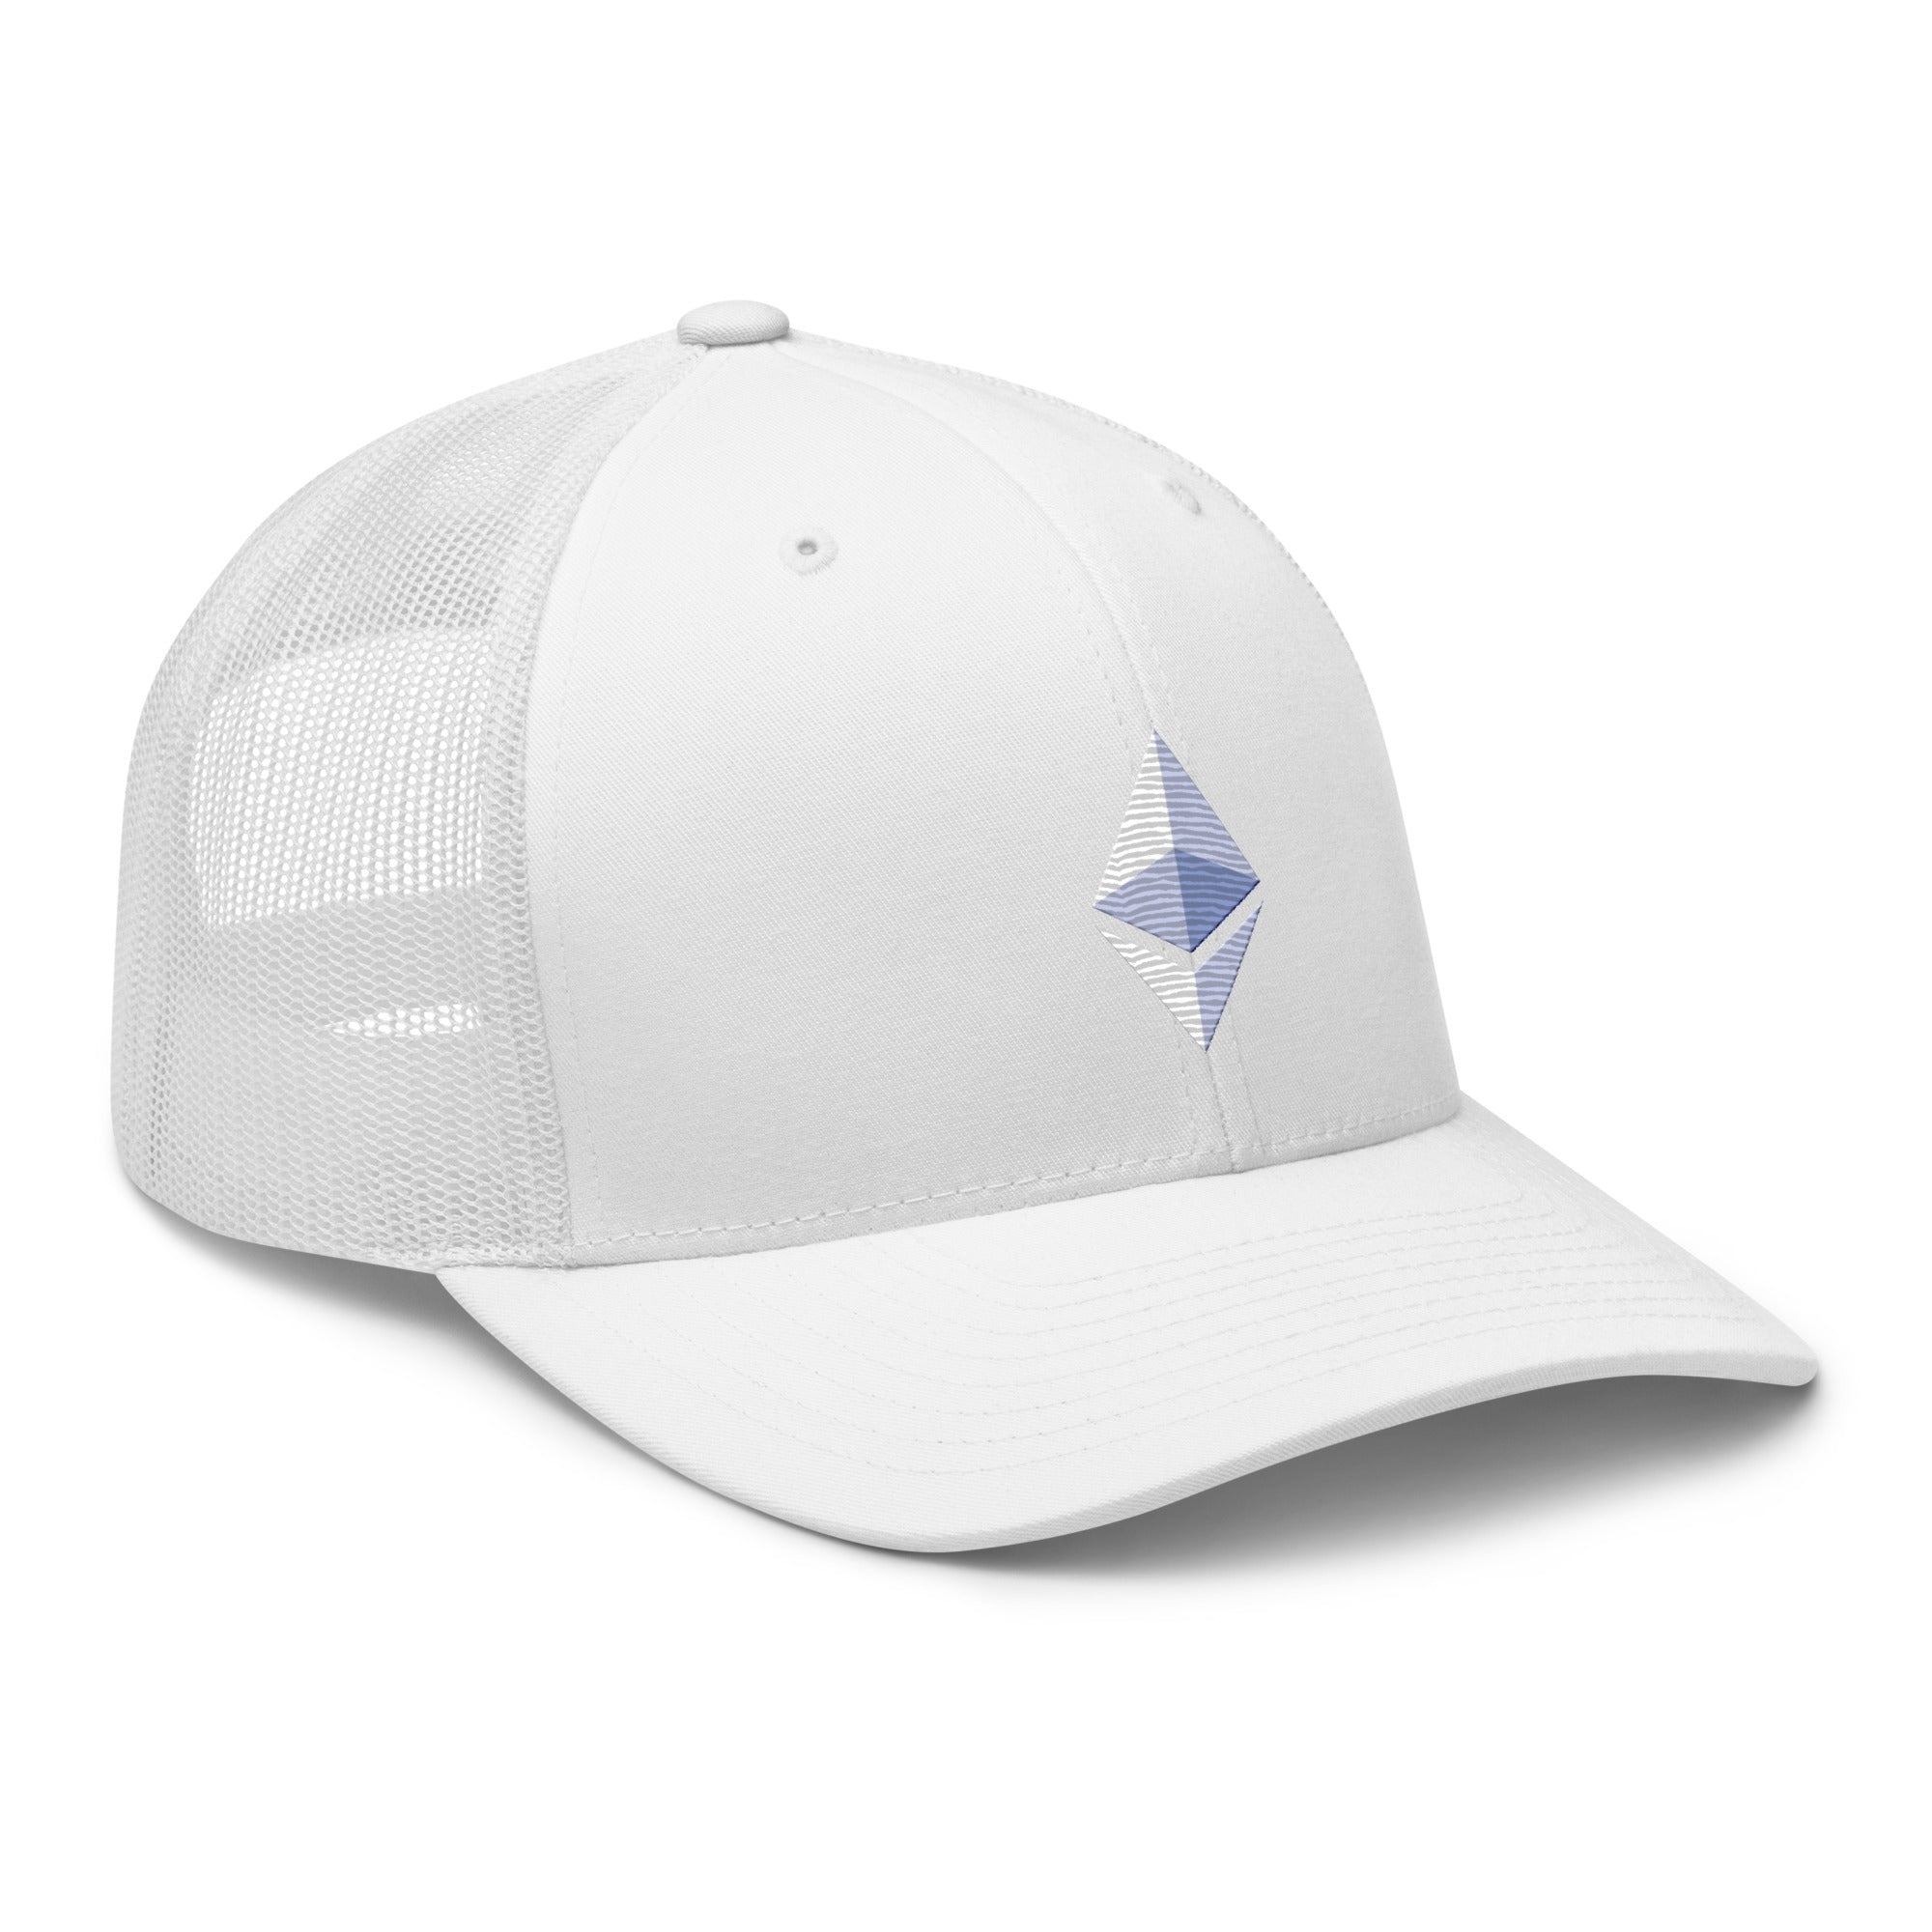 ETH Ethereum Cryptocurrency Symbol Trucker Cap Snapback Hat